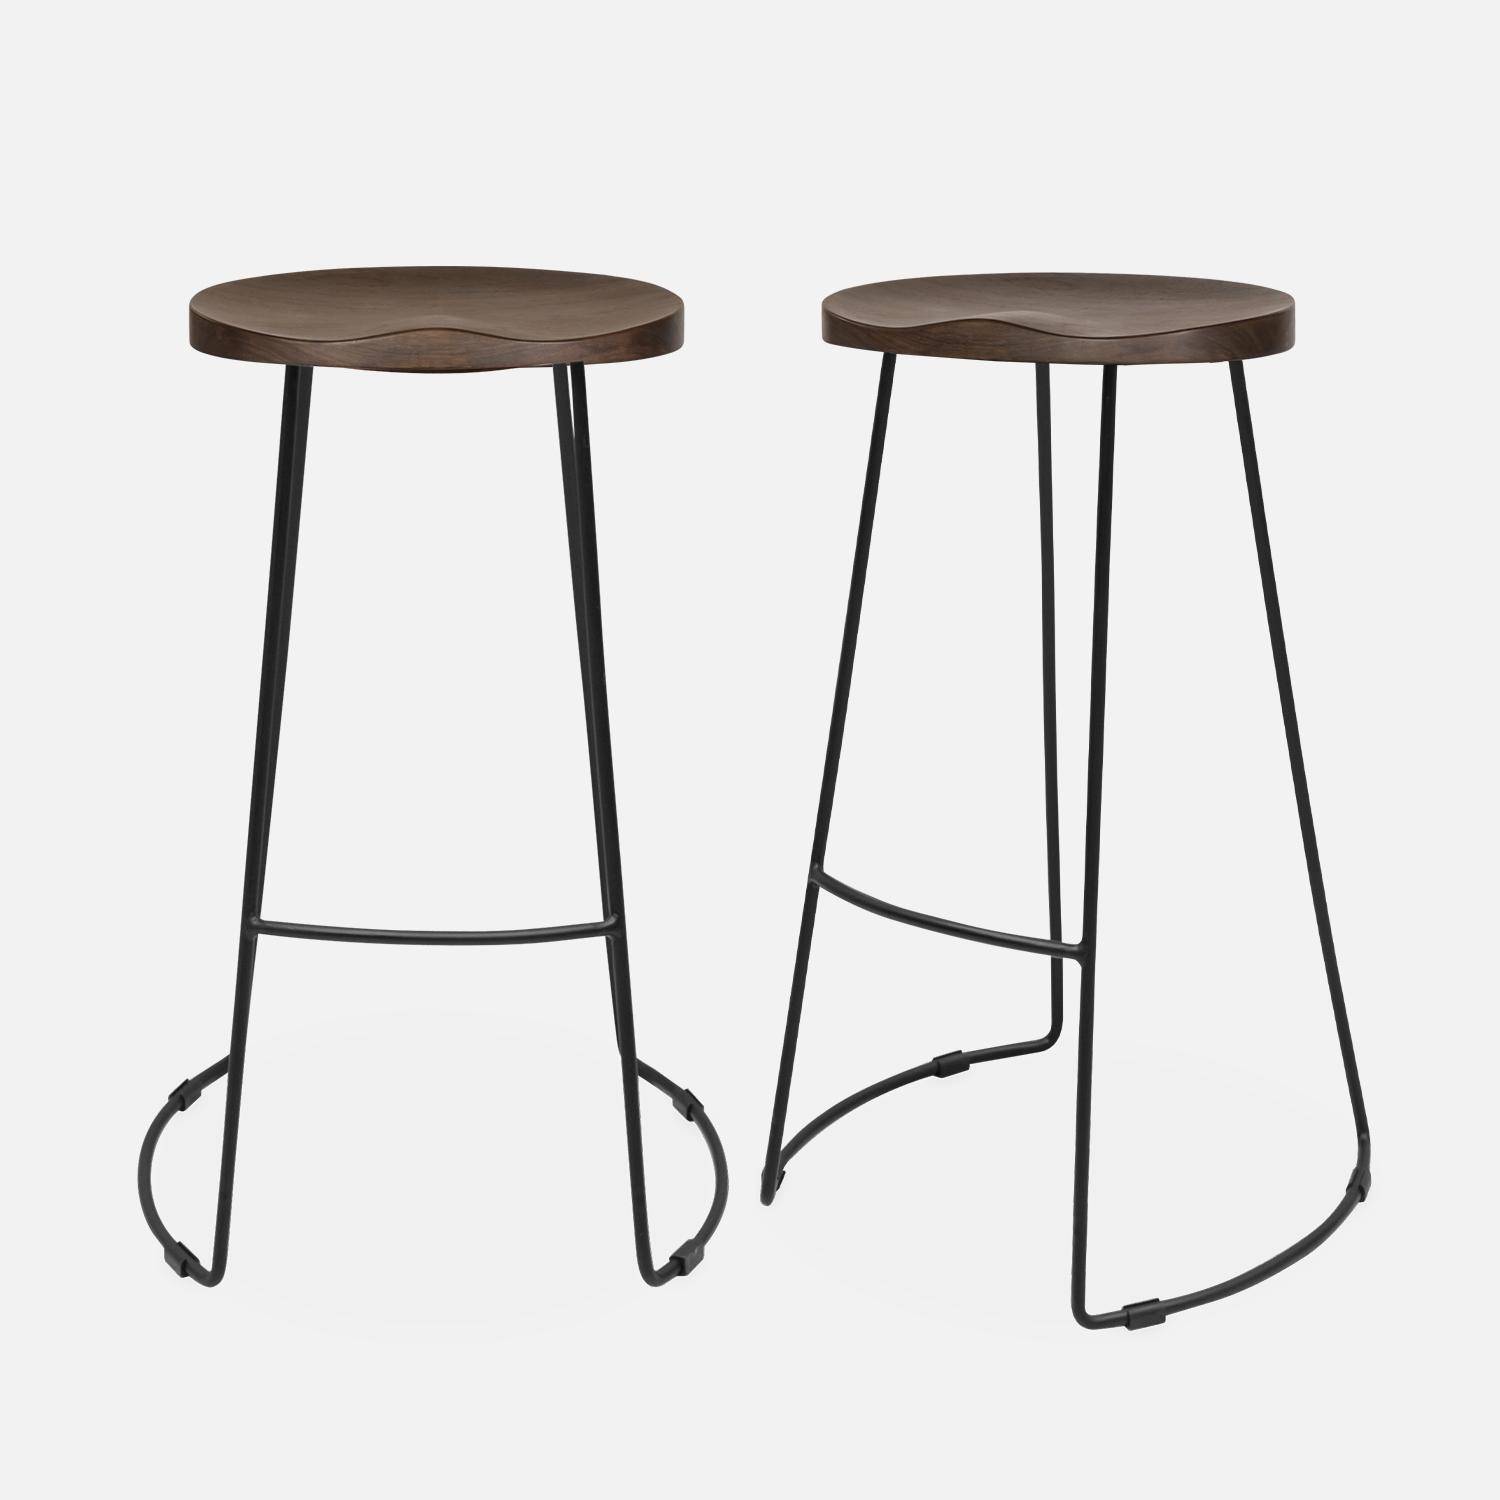 Pair of industrial metal and wooden bar stools, 47x40x75cm, Jaya, Light Walnut, Mango wood seat, black metal legs Photo3